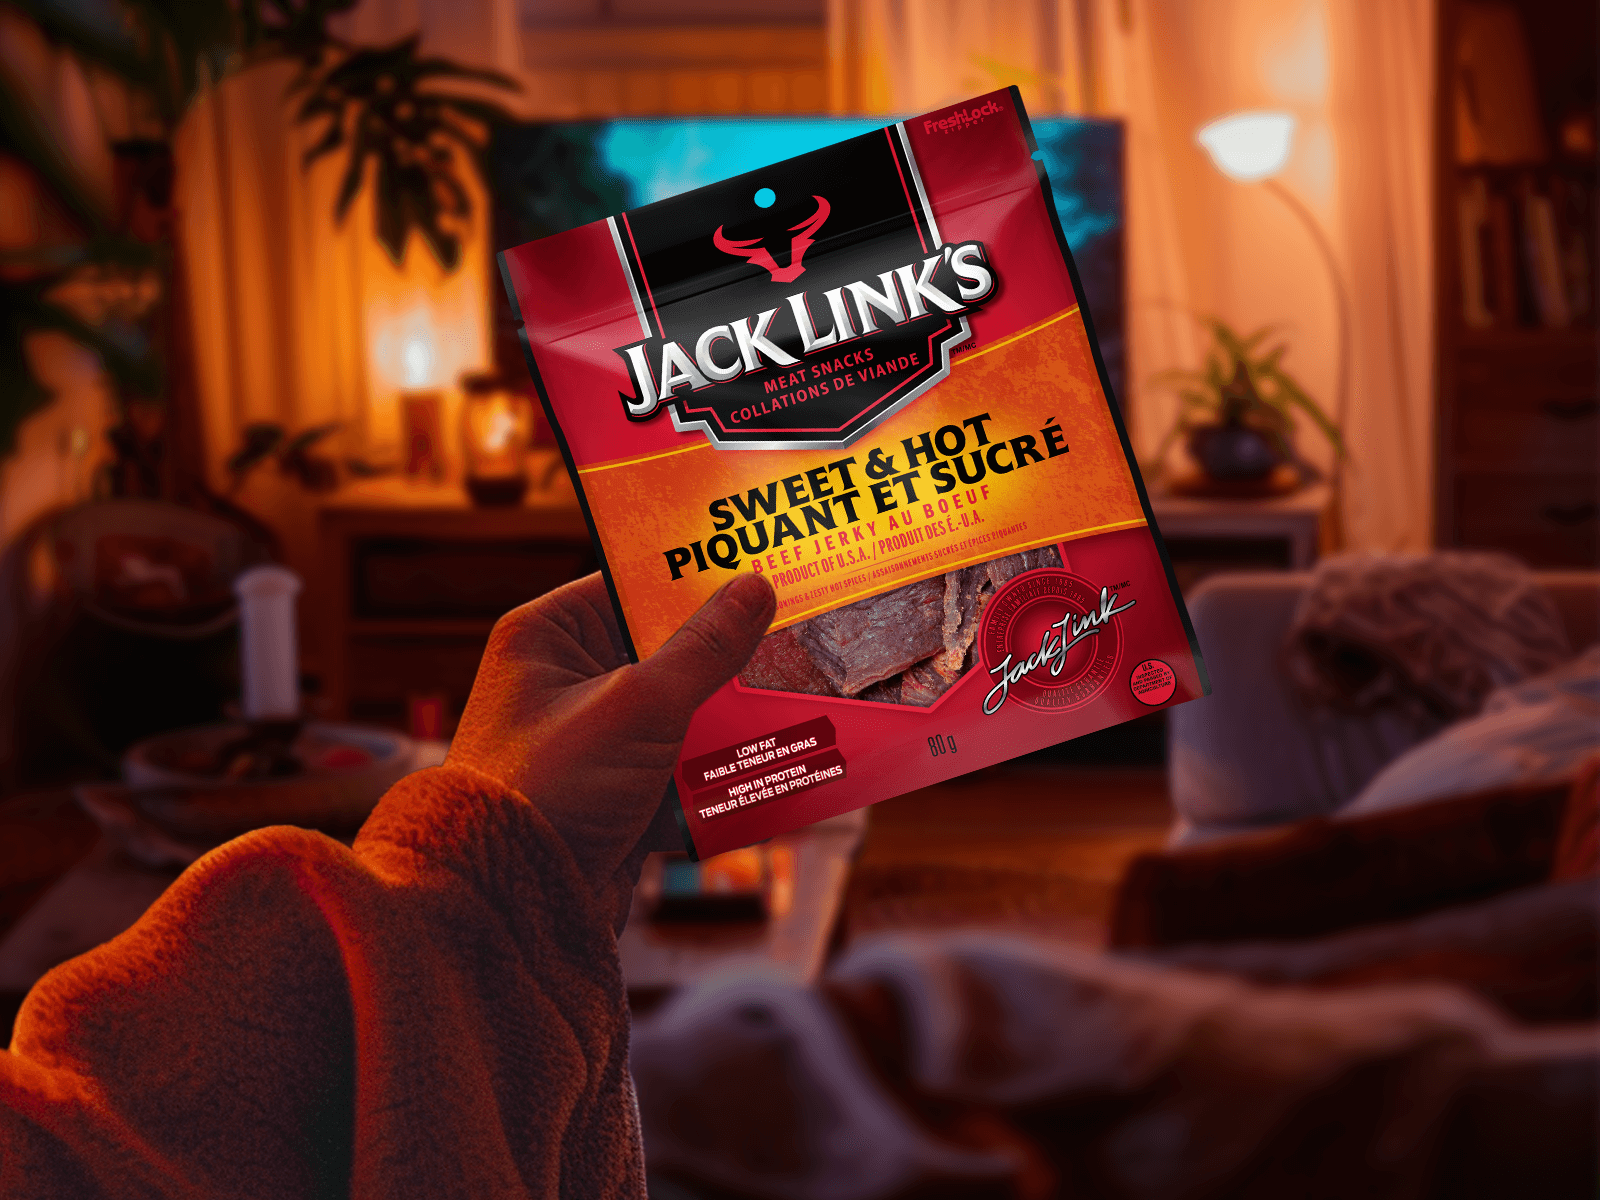 Jack Links Sweet & Hot Beef Jerky